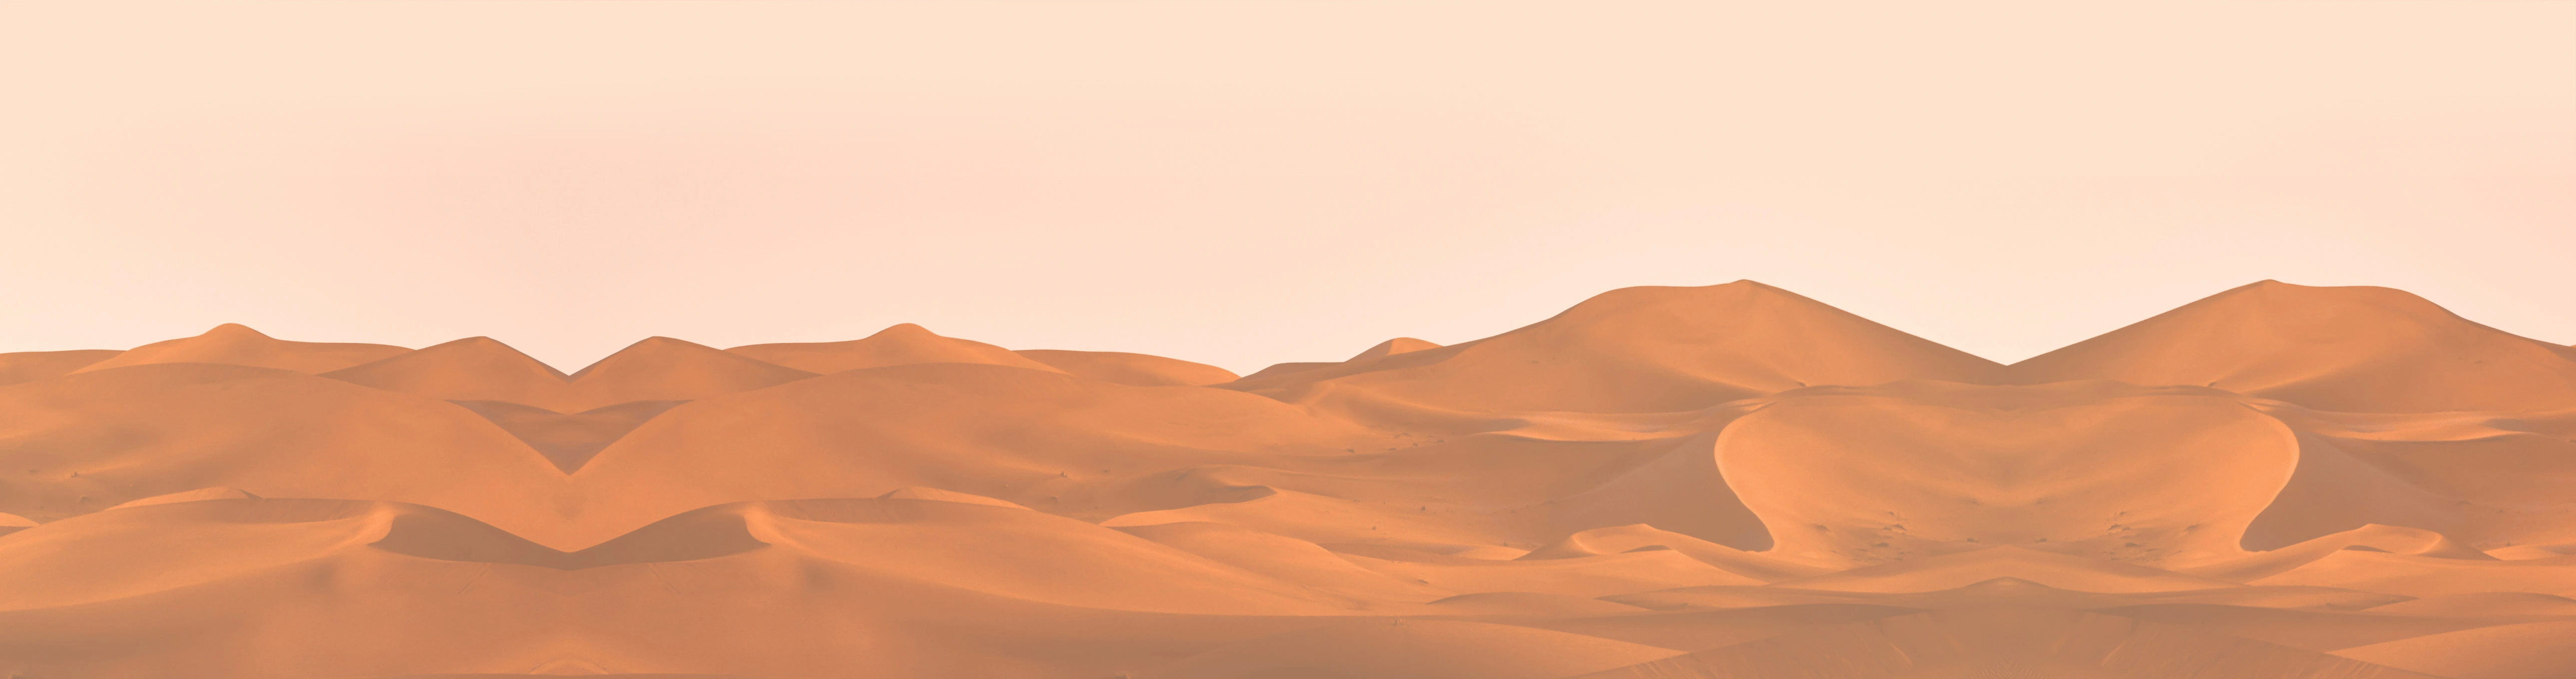 Sandworm Dunes